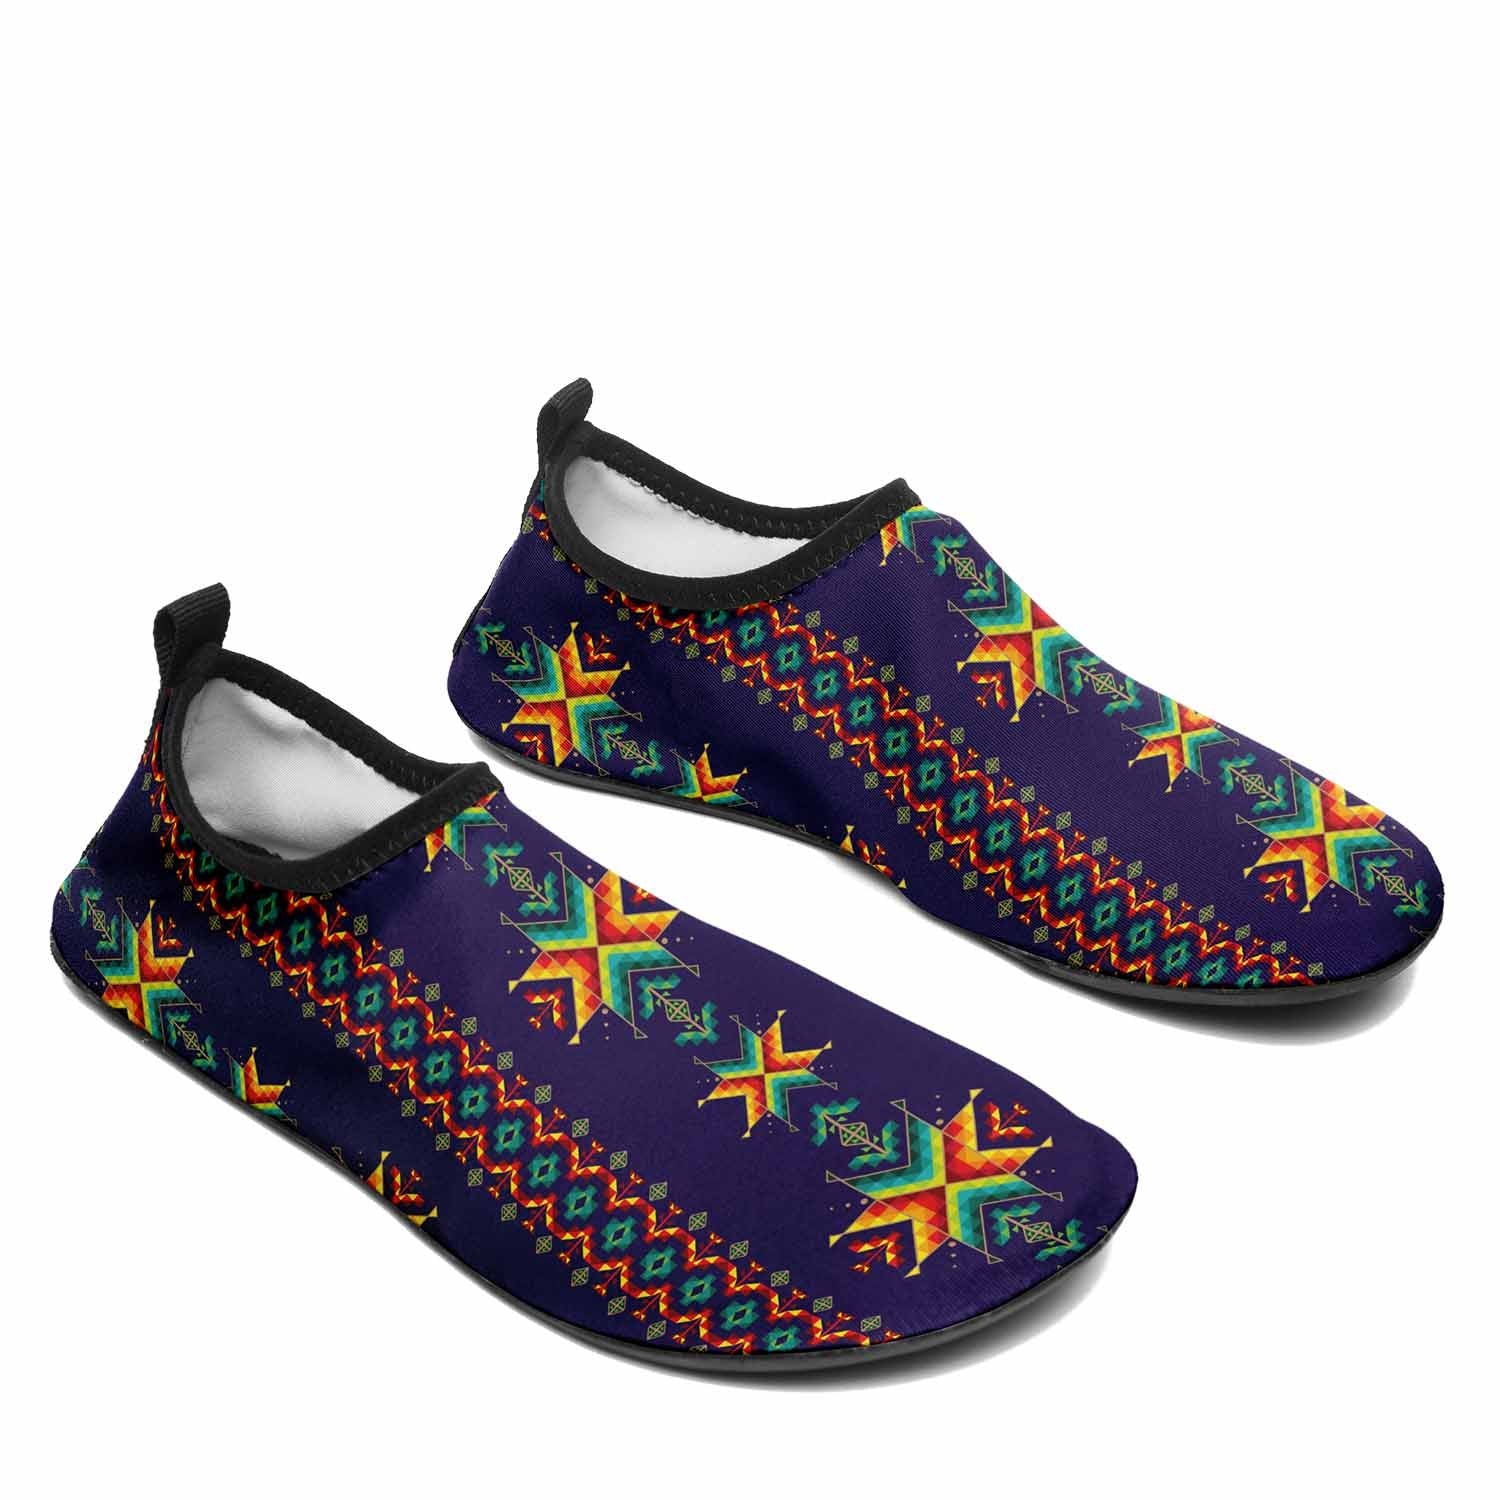 Dreams of Ancestors Indigo Kid's Sockamoccs Slip On Shoes